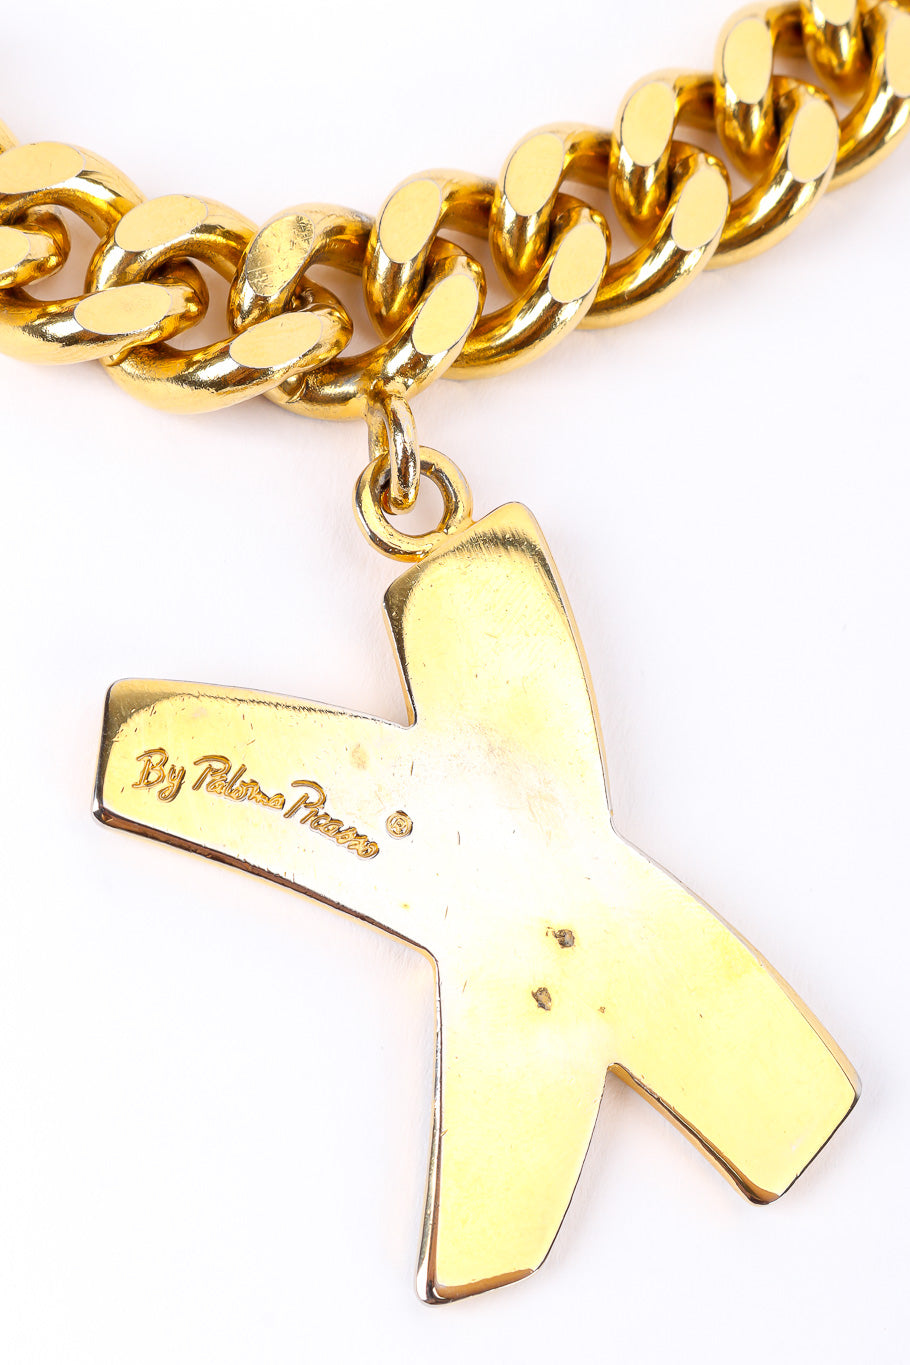 XOXO charm belt by Paloma Picasso on white background signature on back of X charm @recessla